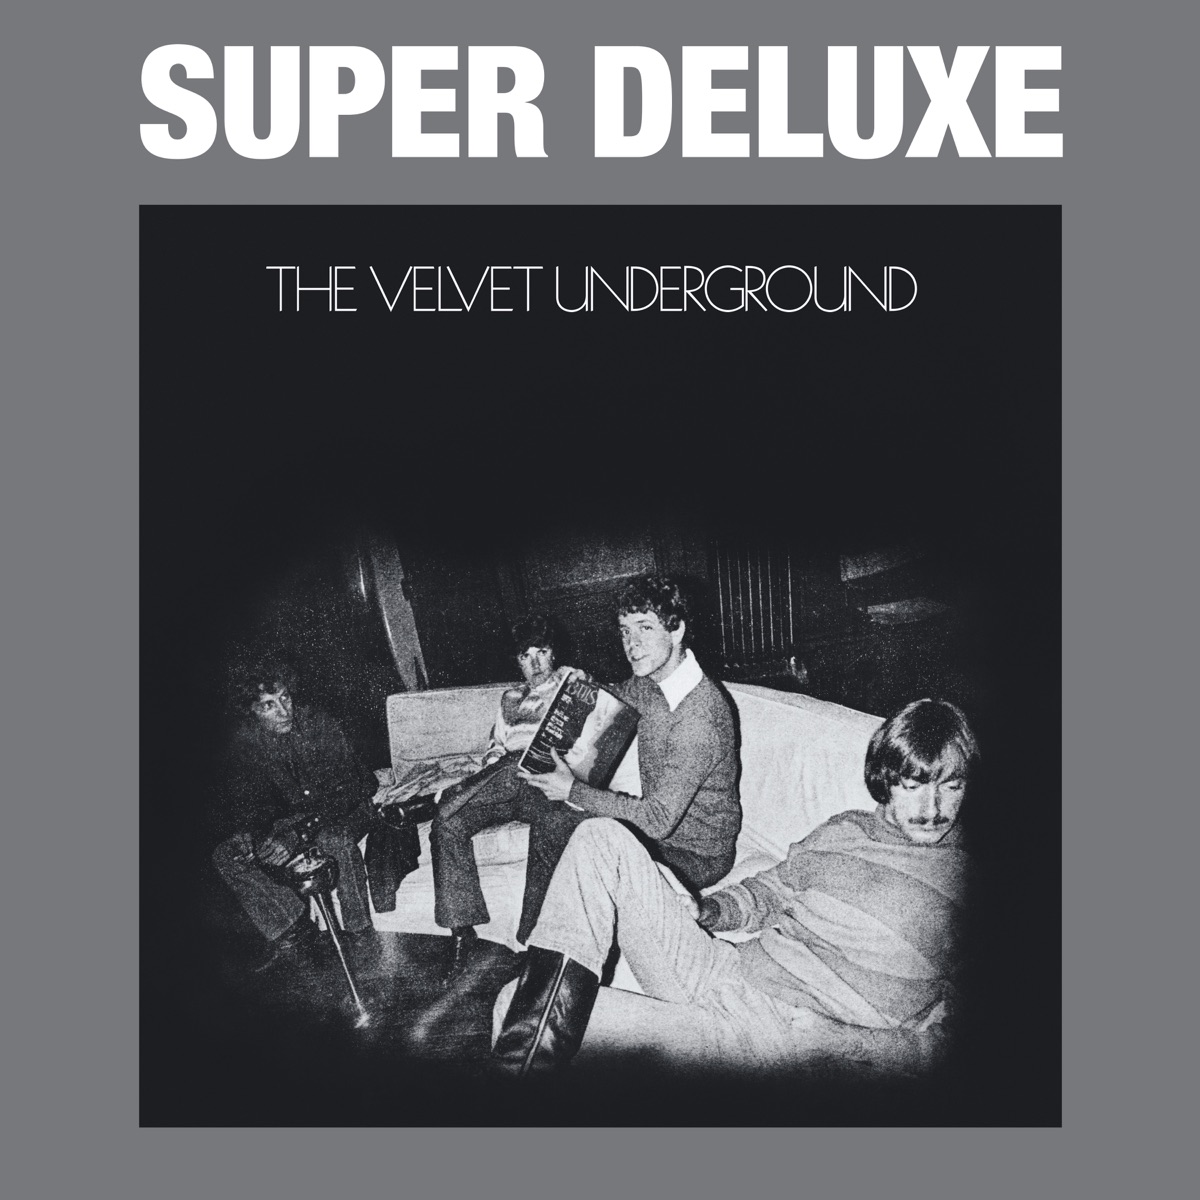 The Velvet Underground - Album by The Velvet Underground - Apple Music